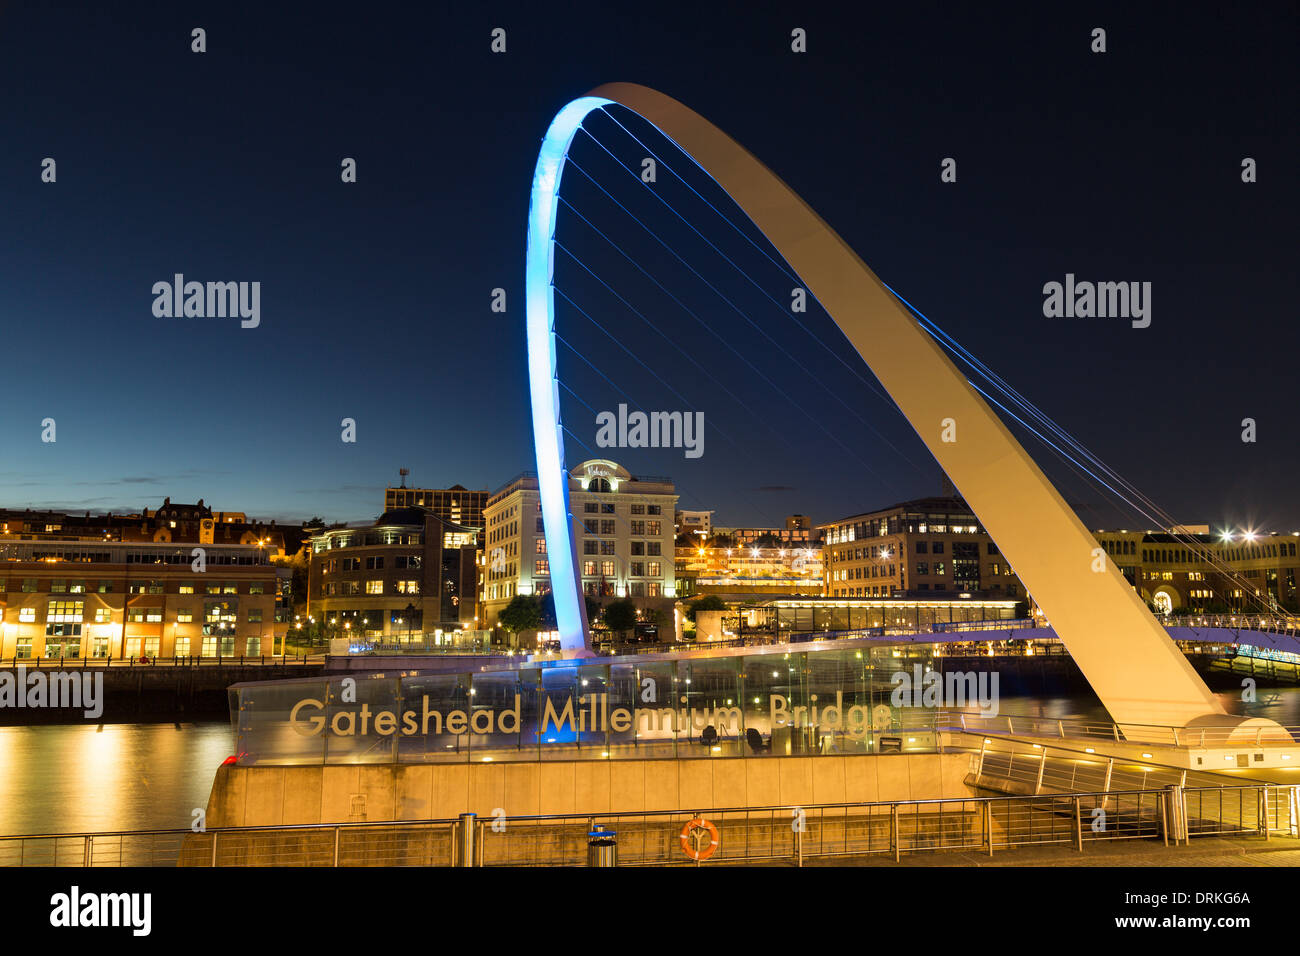 Puente del milenio de Gateshead, Newcastle sobre Tyne, Inglaterra Foto de stock